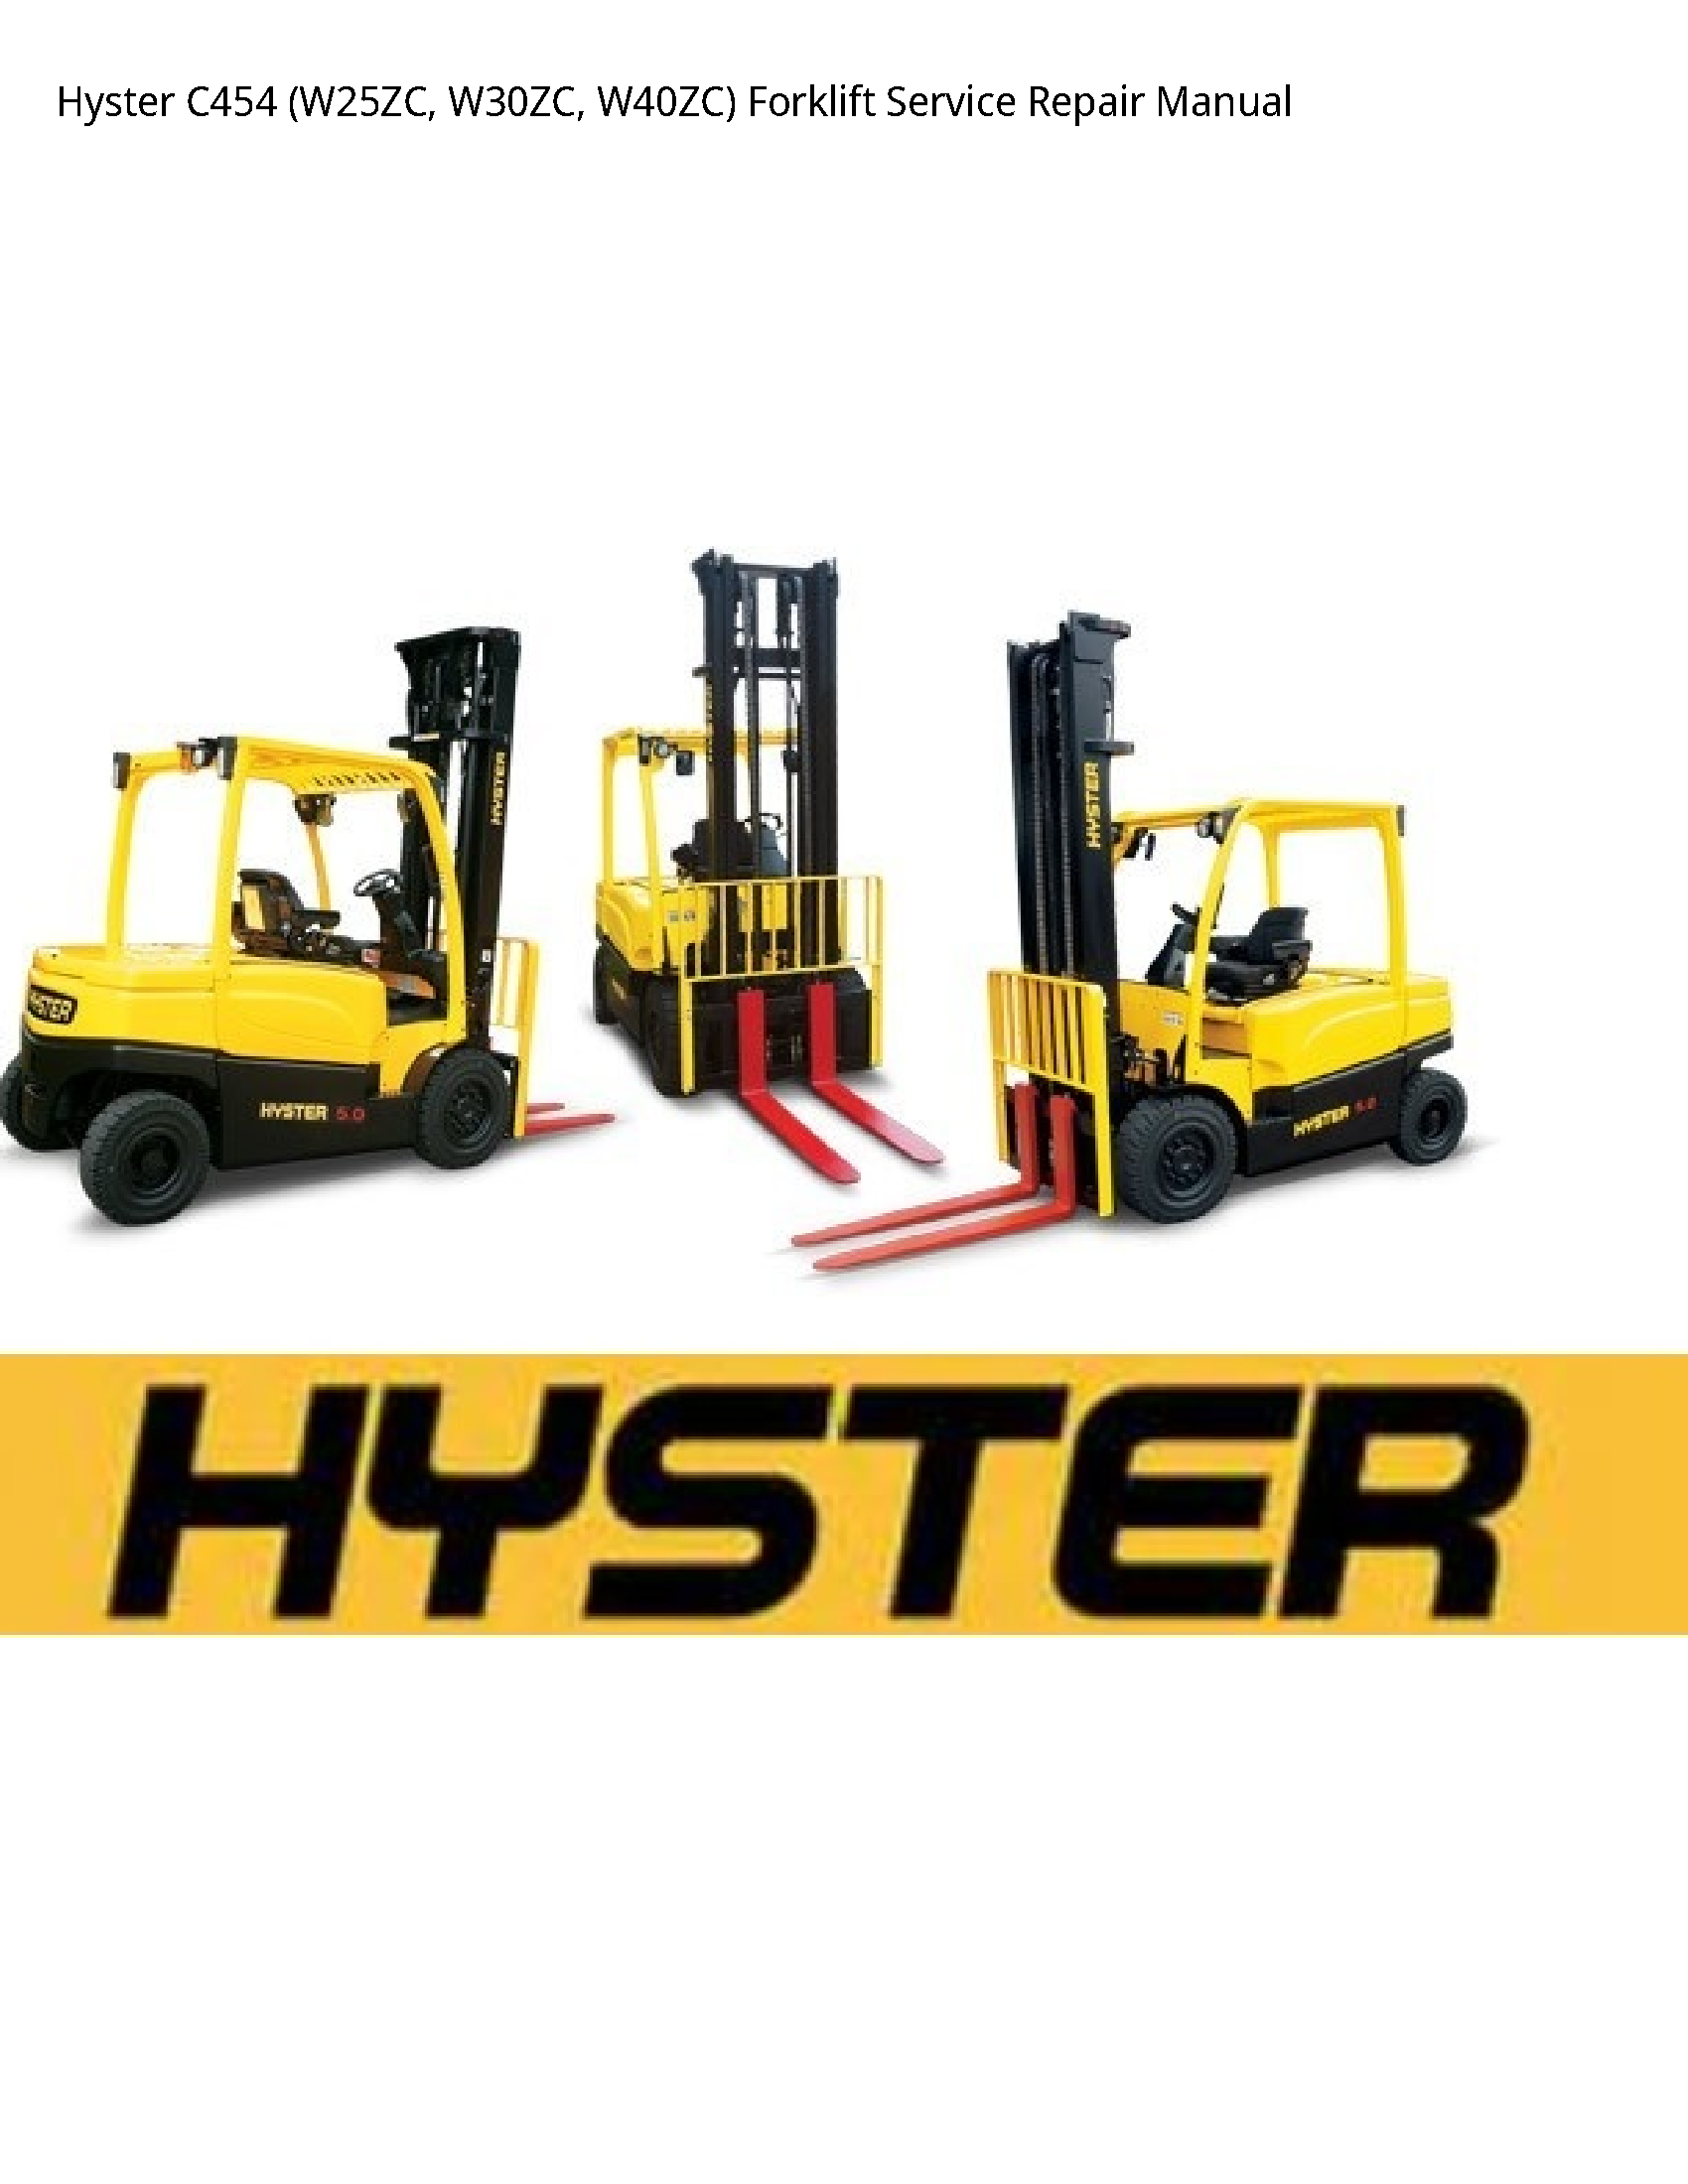 Hyster C454 Forklift manual